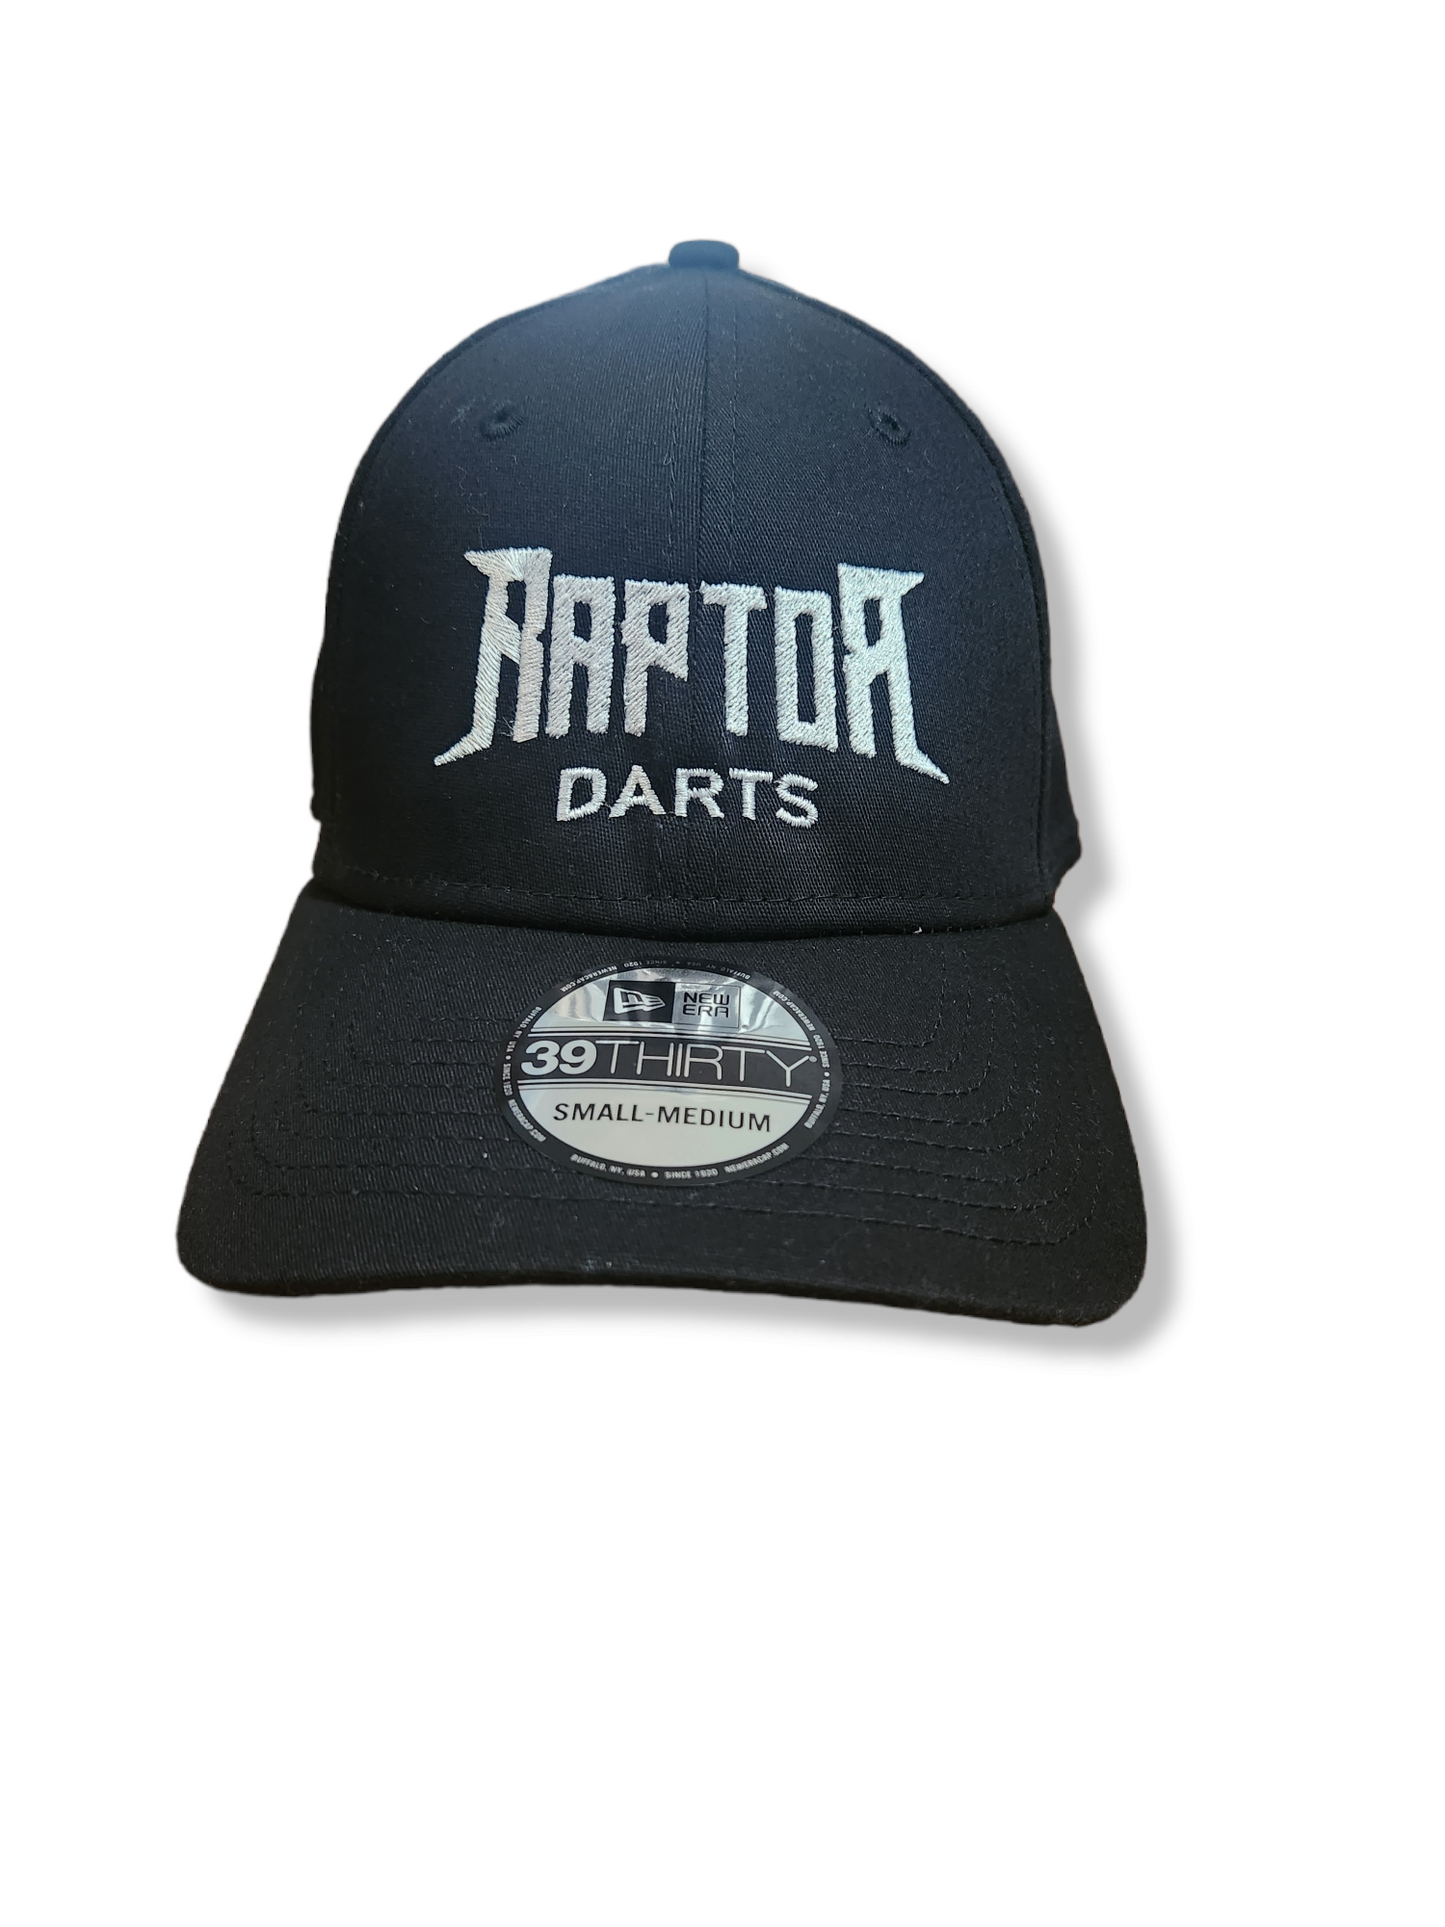 Raptor Darts Hats